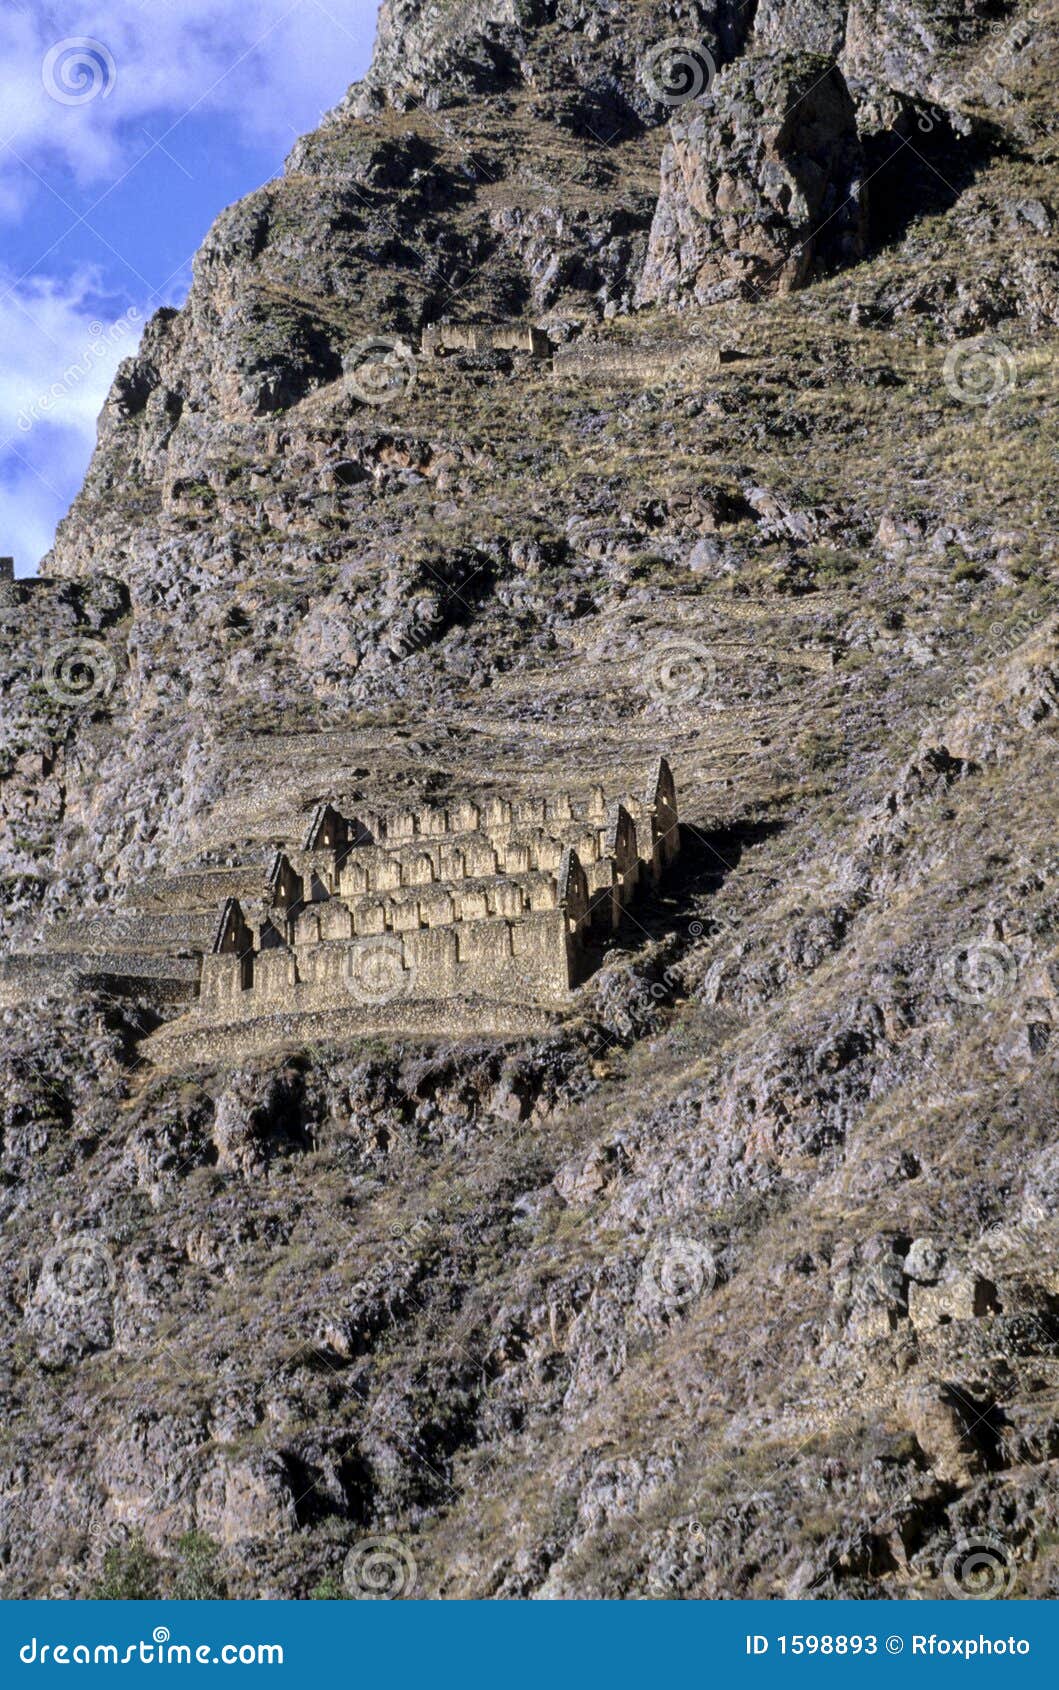 incan ruins- sacred valley, peru